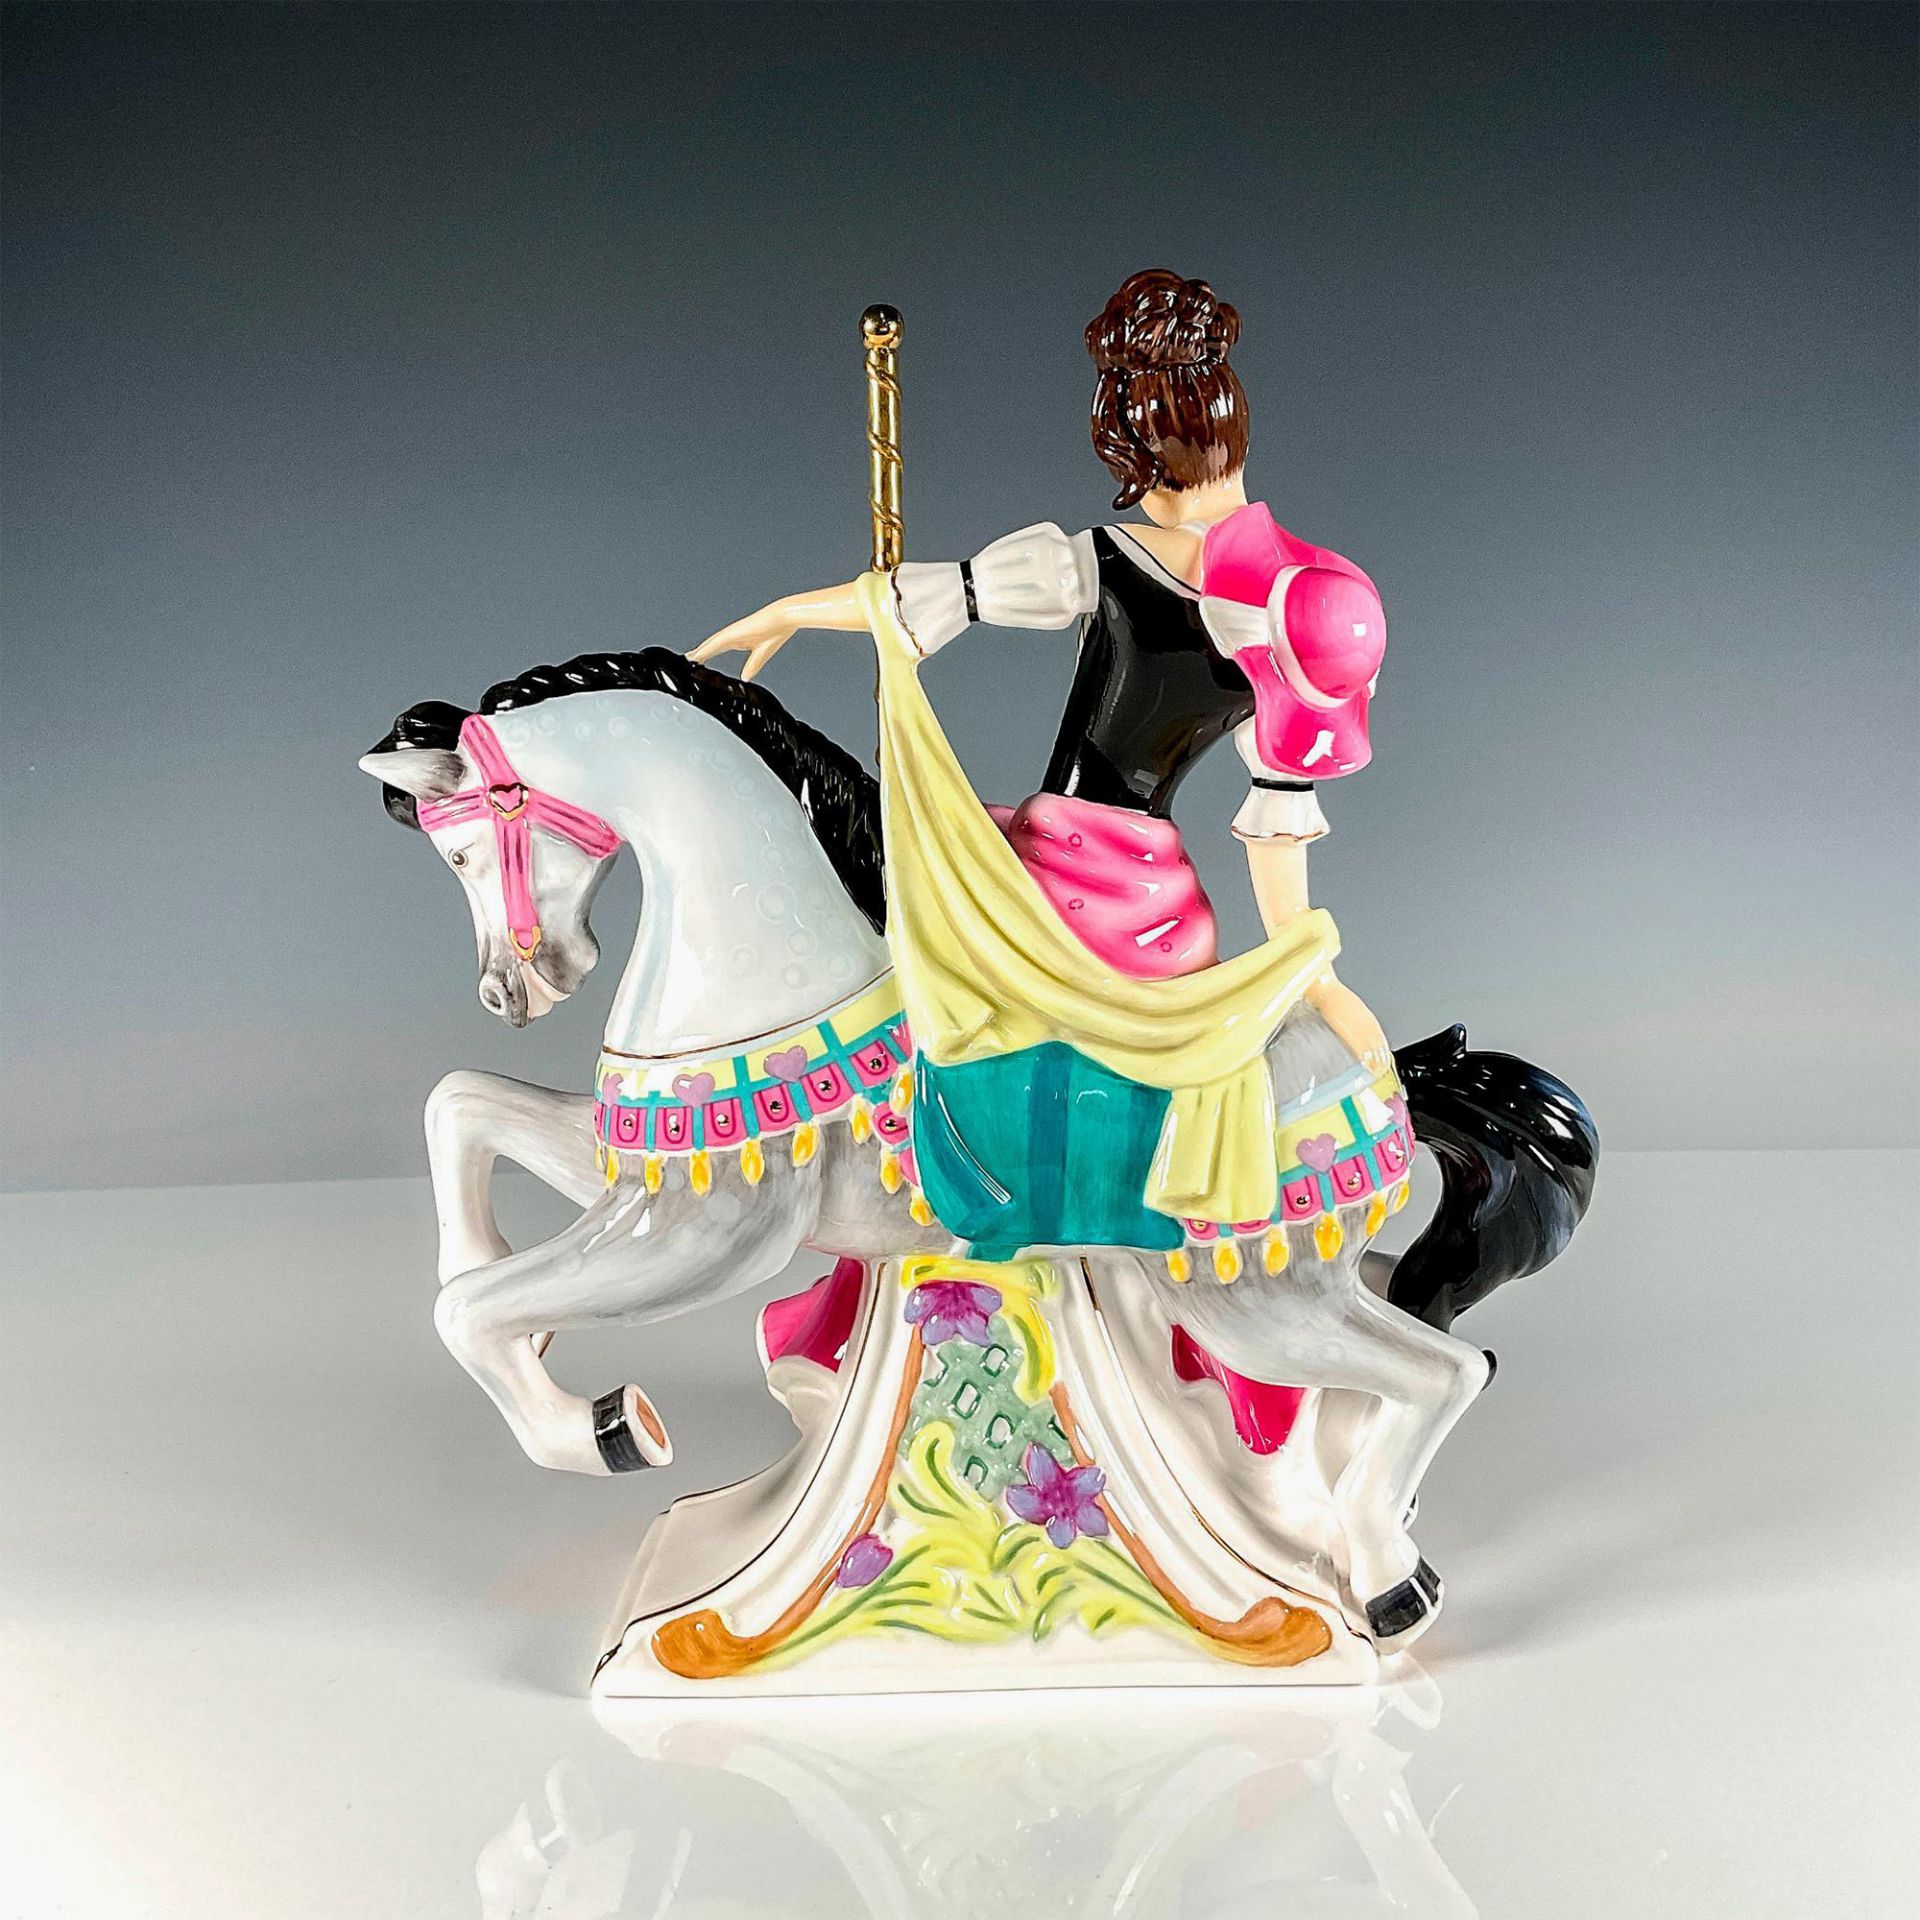 English Ladies Company Figurine, Fairground Attraction - Image 2 of 3